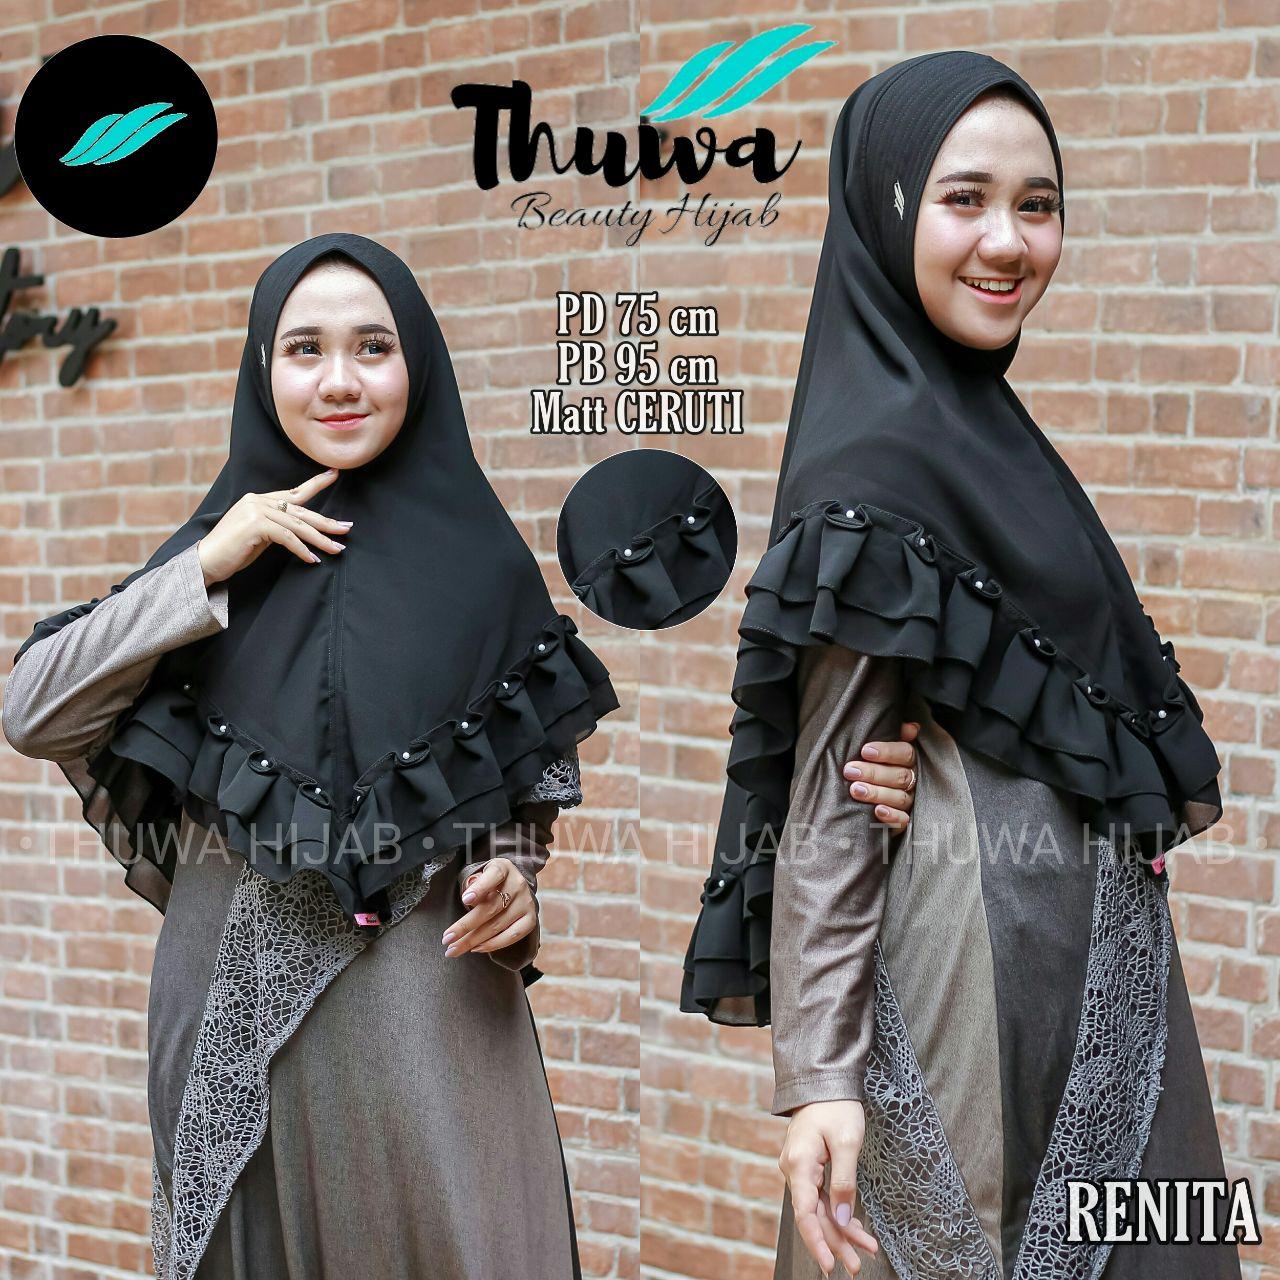 Bazar AB - Hijab - Thuwa Hijab - Renita - khimar - ceruty - khusus hitam - jilbaba - kerudung | Jual Beli Komunitas AB